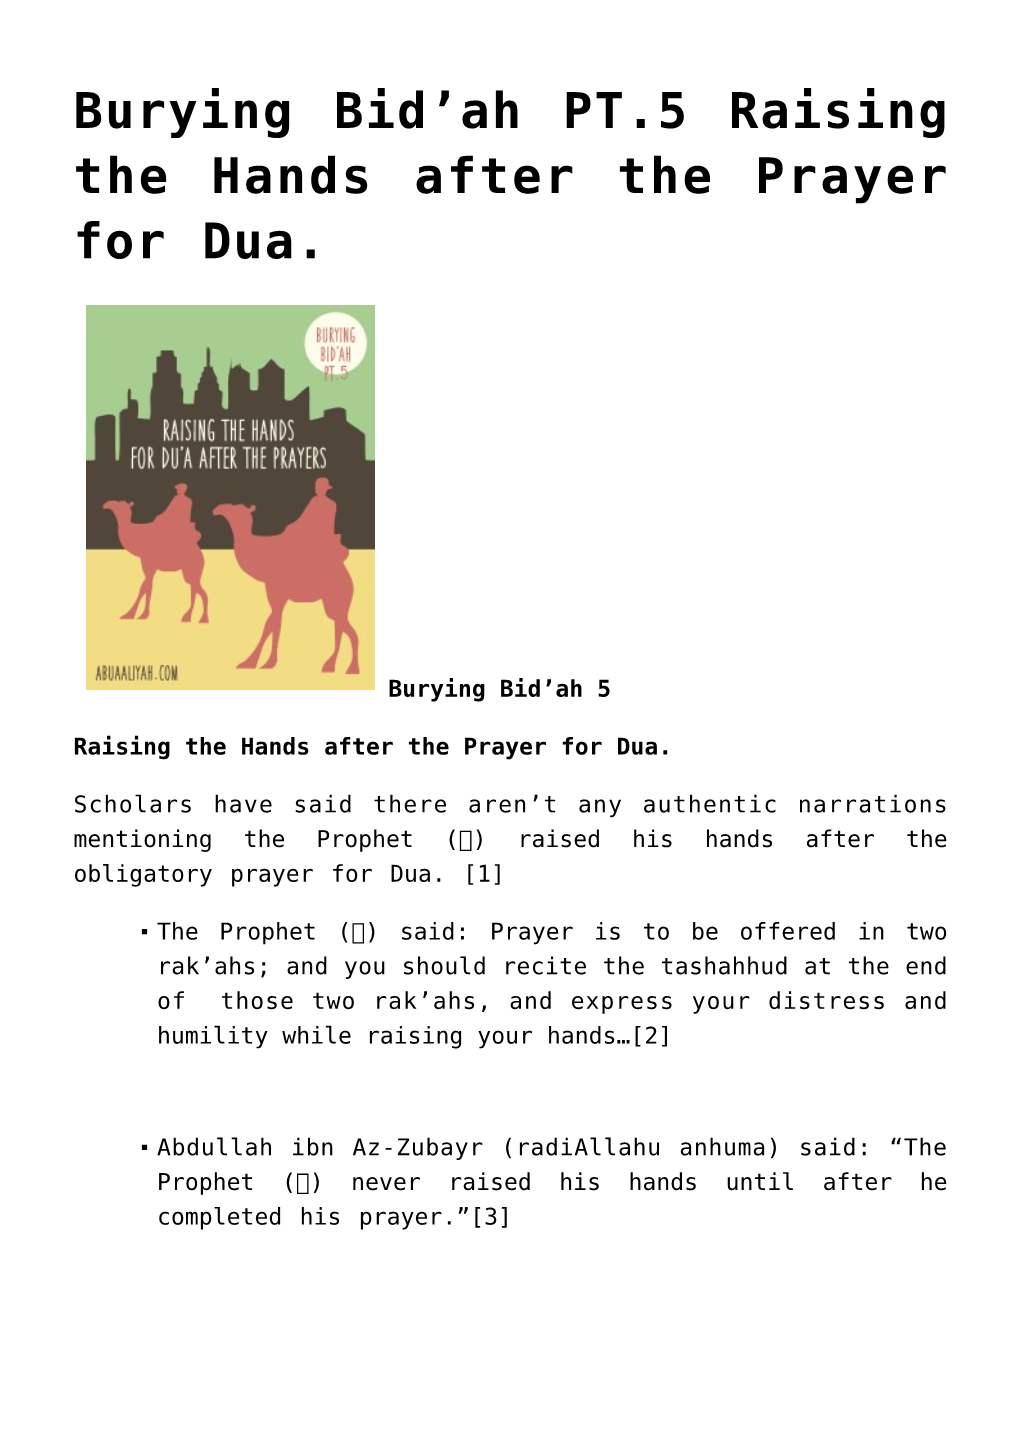 Burying Bid'ah PT.5 Raising the Hands After the Prayer for Dua.,Propaganda Pundits Masquerading the Salafi Dawah,The Various